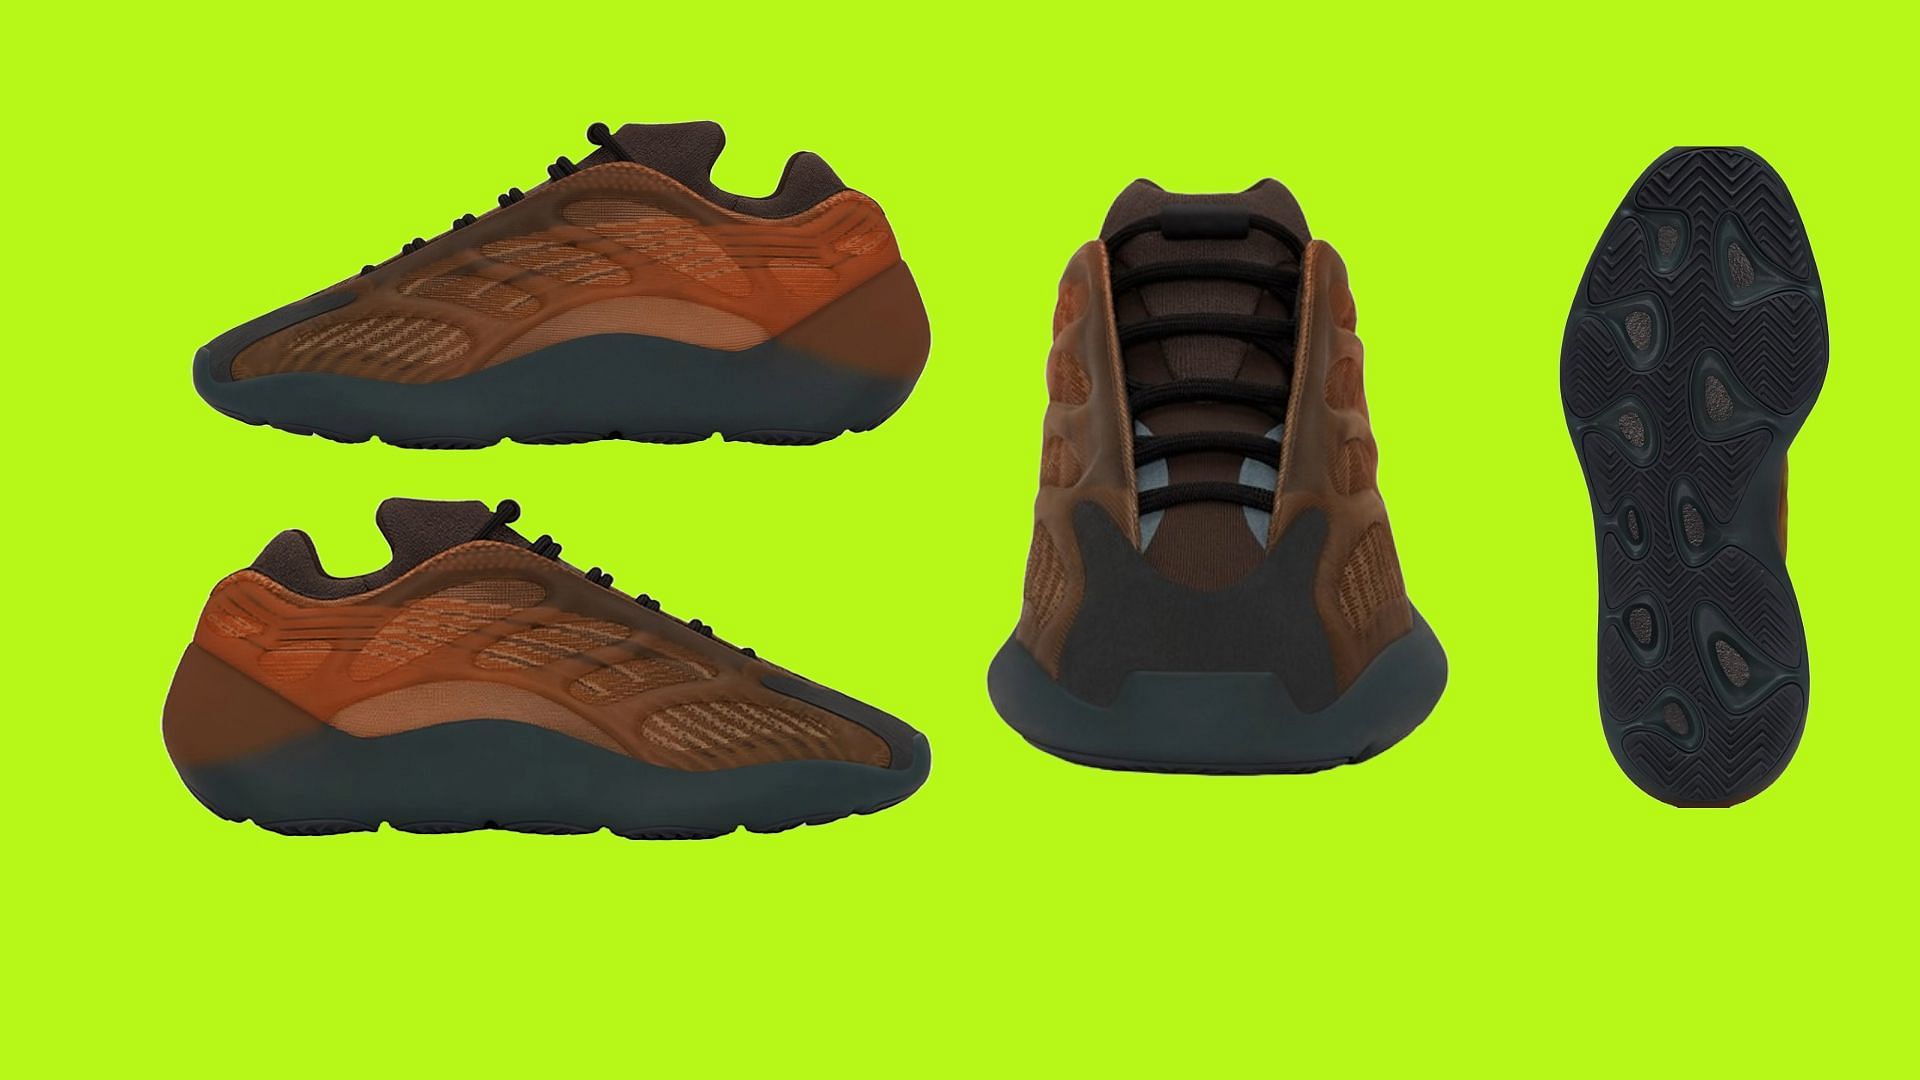 Adidas Yeezy 700 &ldquo;Copper Fade&rdquo; colorway (Image via Adidas)